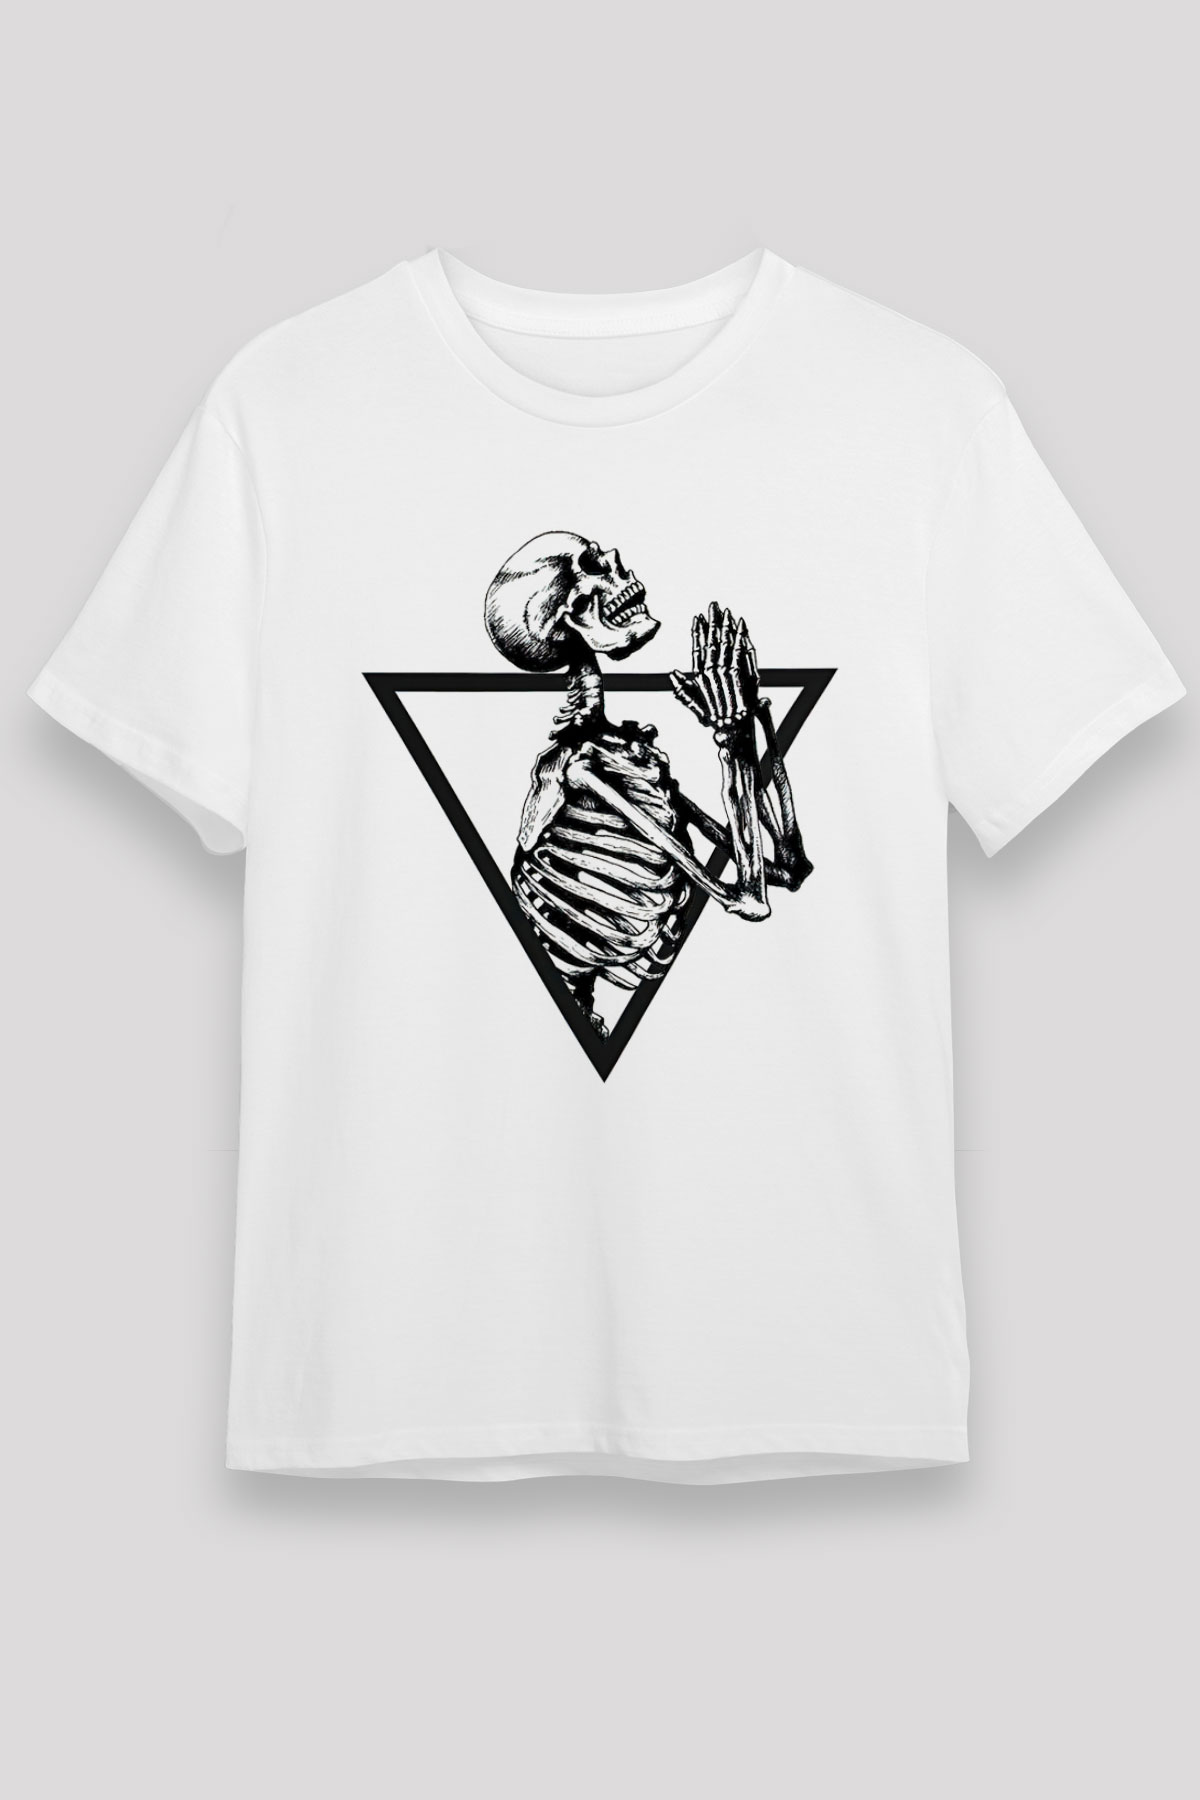 Suicideboys T shirt,Hip Hop,Rap Tshirt 04/